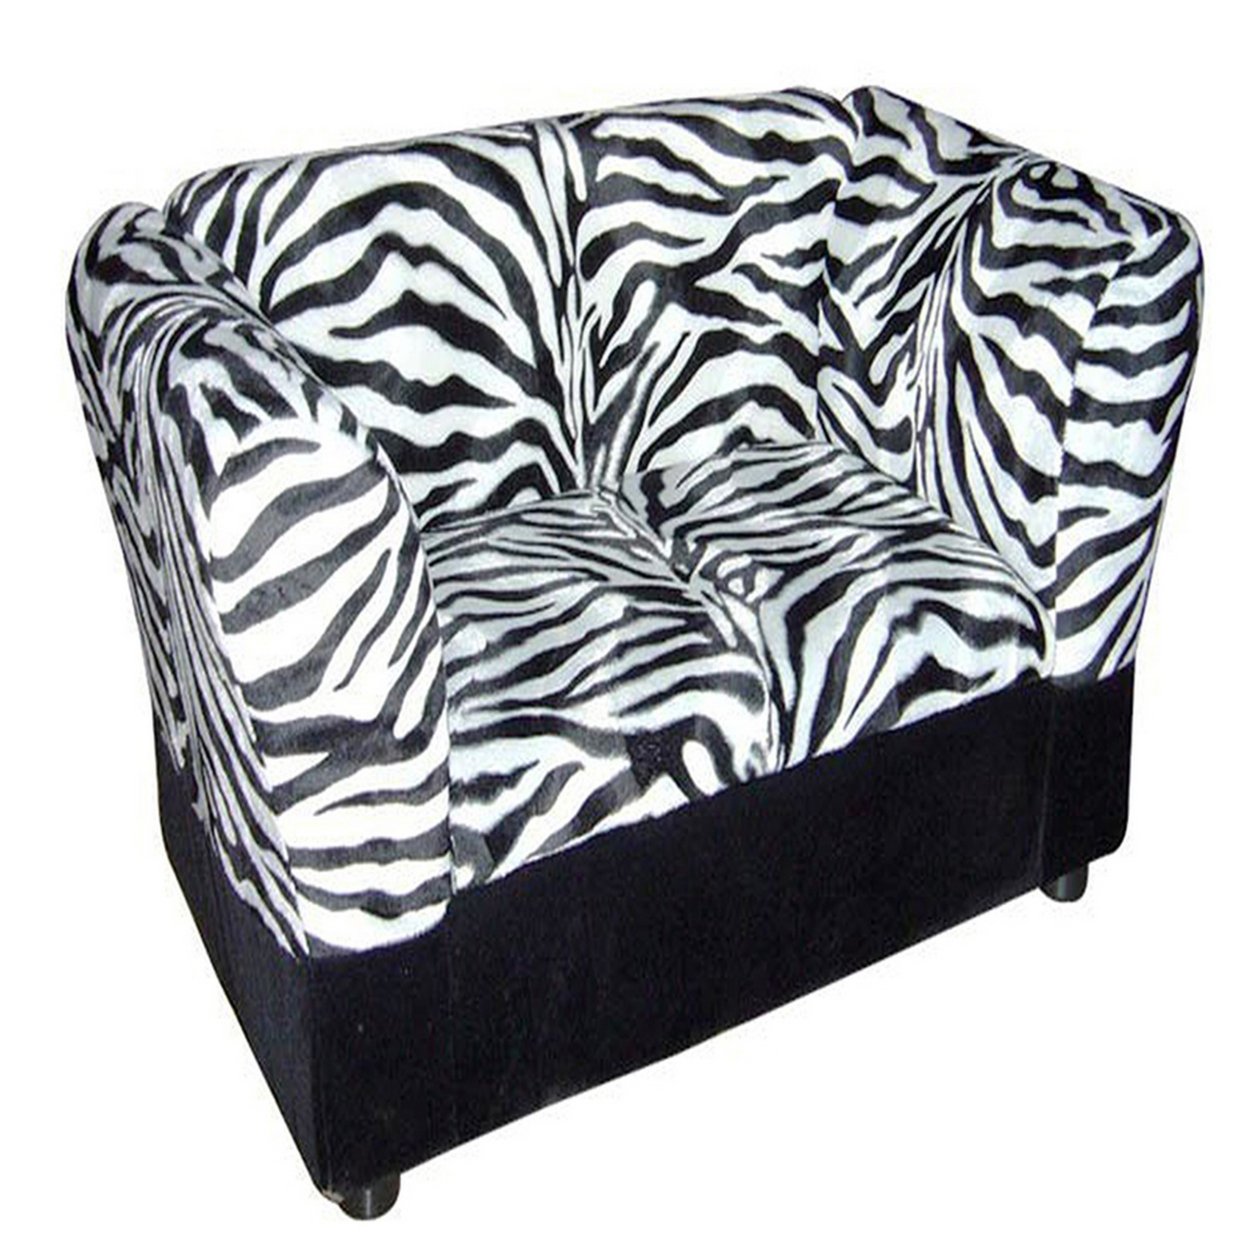 Sofa Pet Bed With Zebra Print Fabric And Storage, White And Black- Saltoro Sherpi